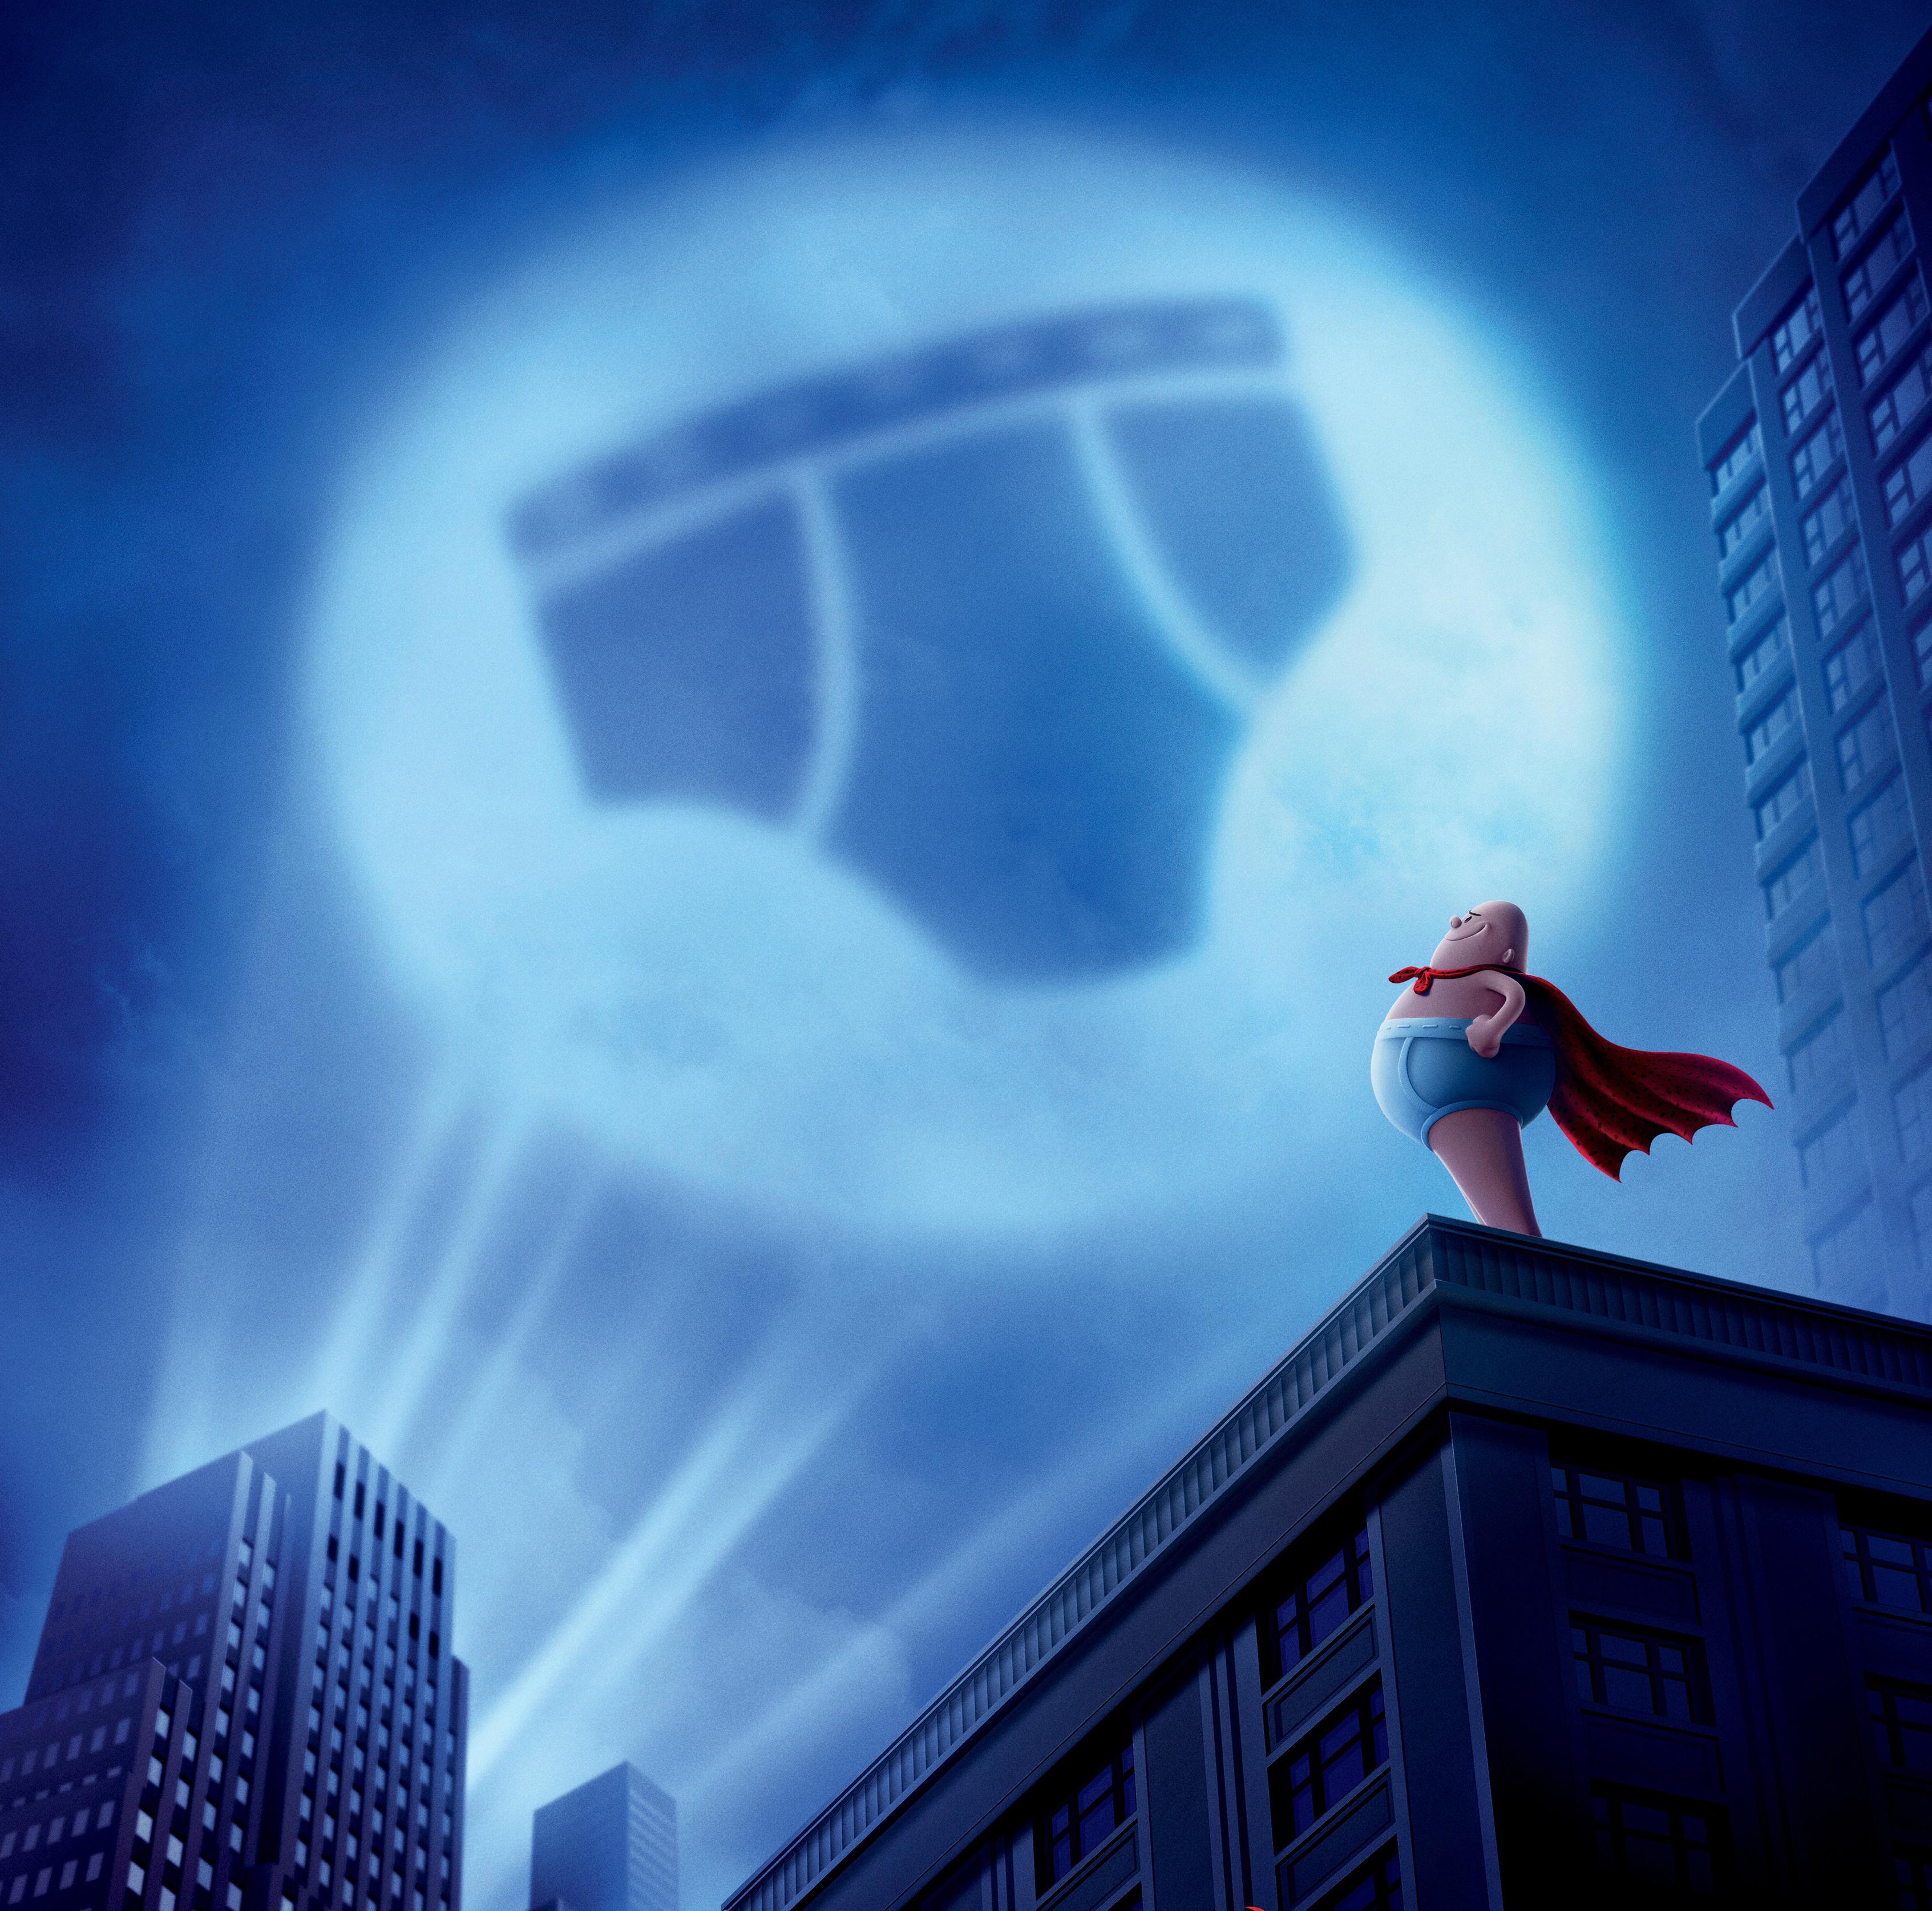 Wallpaper Captain Underpants, Superhero movie, Animation, 2017